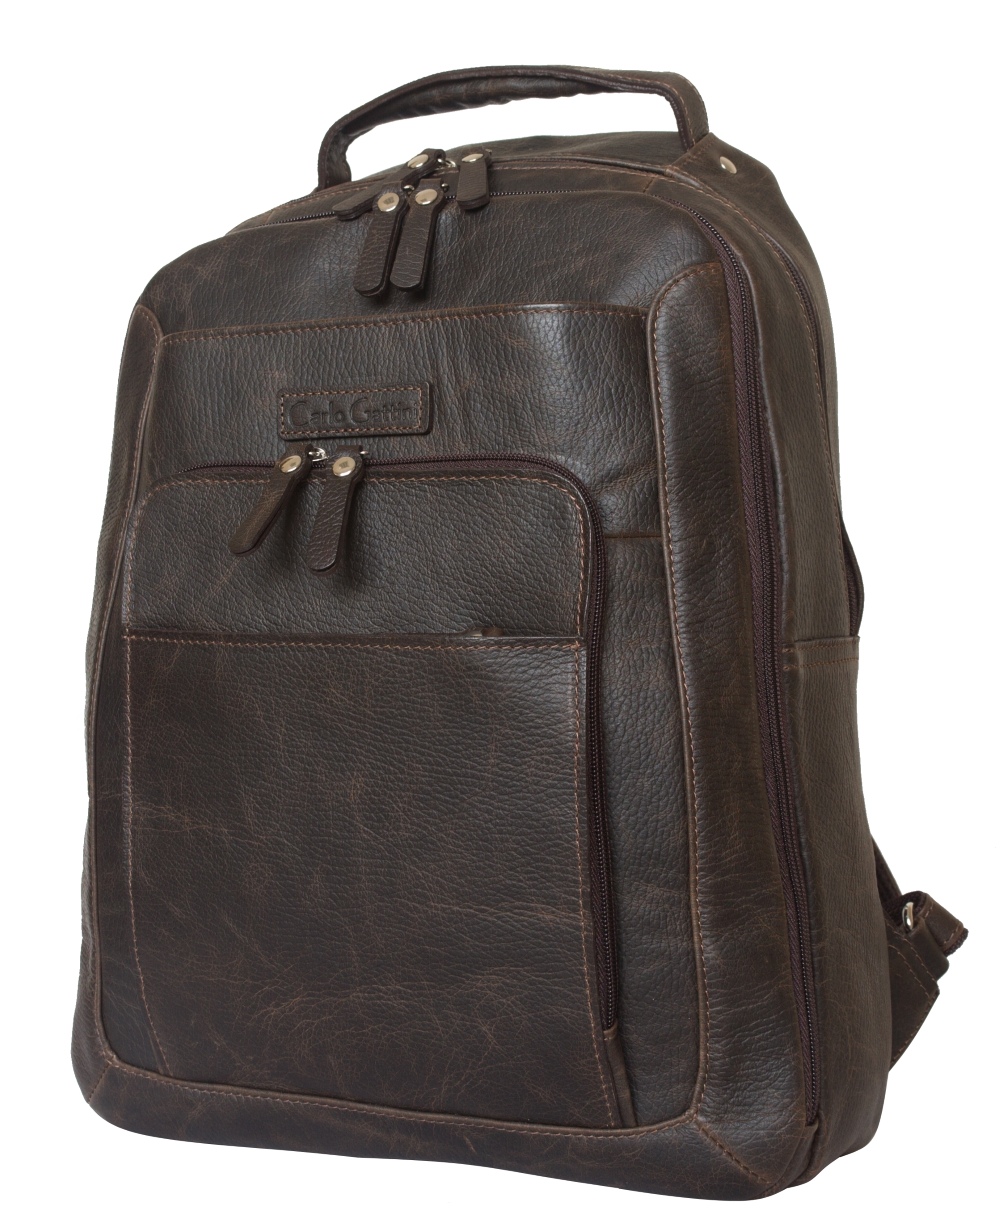 Кожаный рюкзак Monfestino brown (арт. 3034-04)